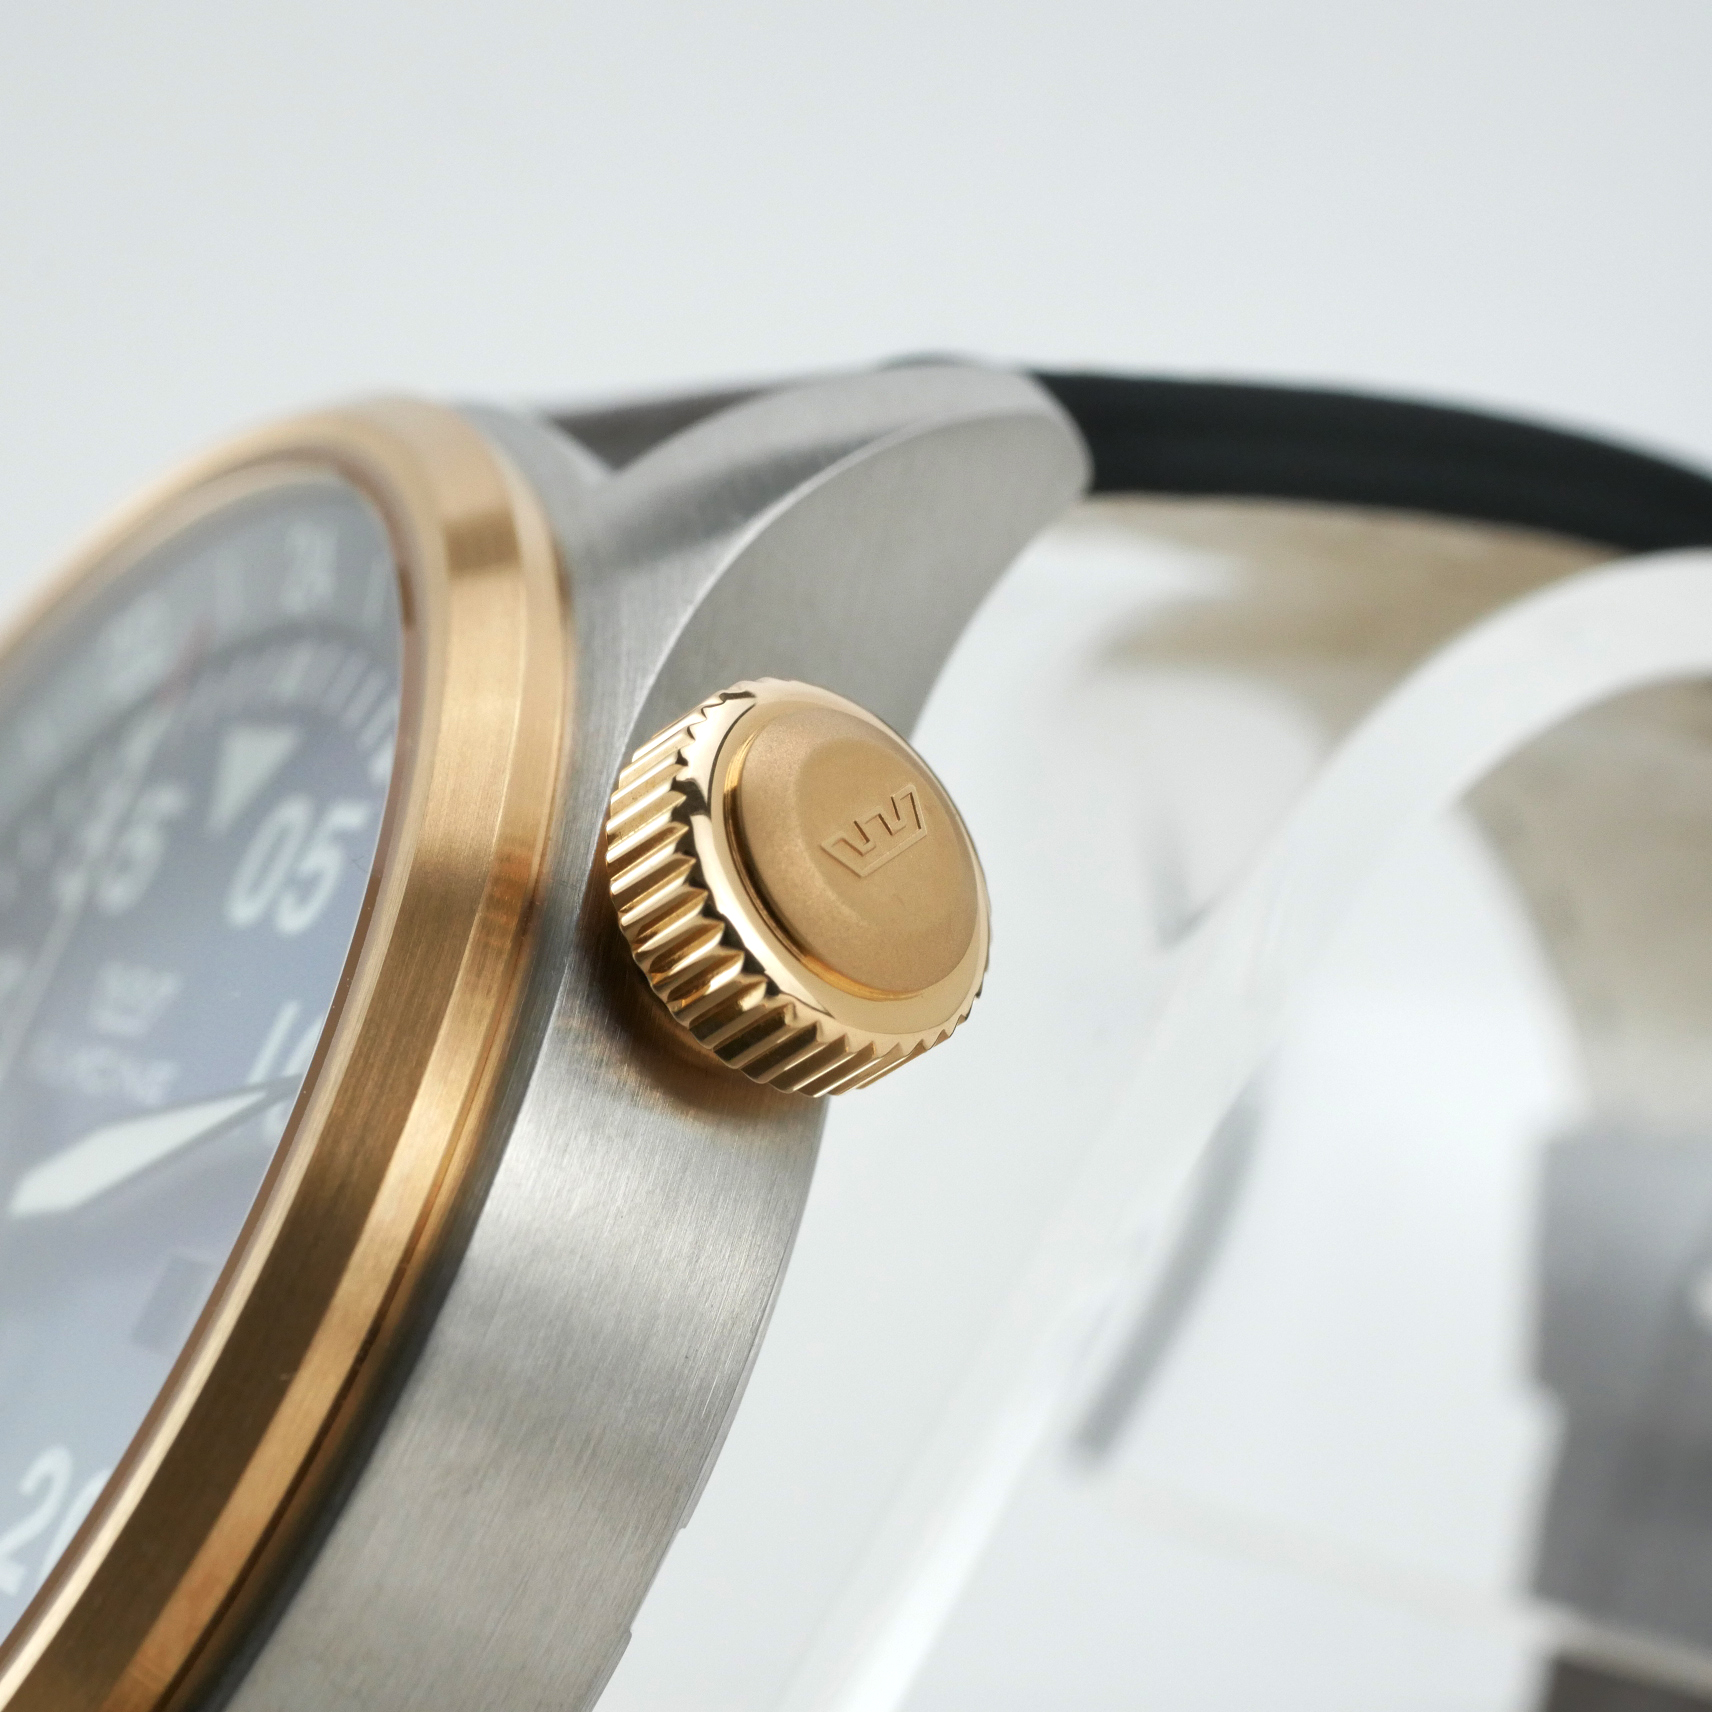 Glycine Airpilot GMT Swiss Men's Watch Blue Dial / Leather Strap GL0352